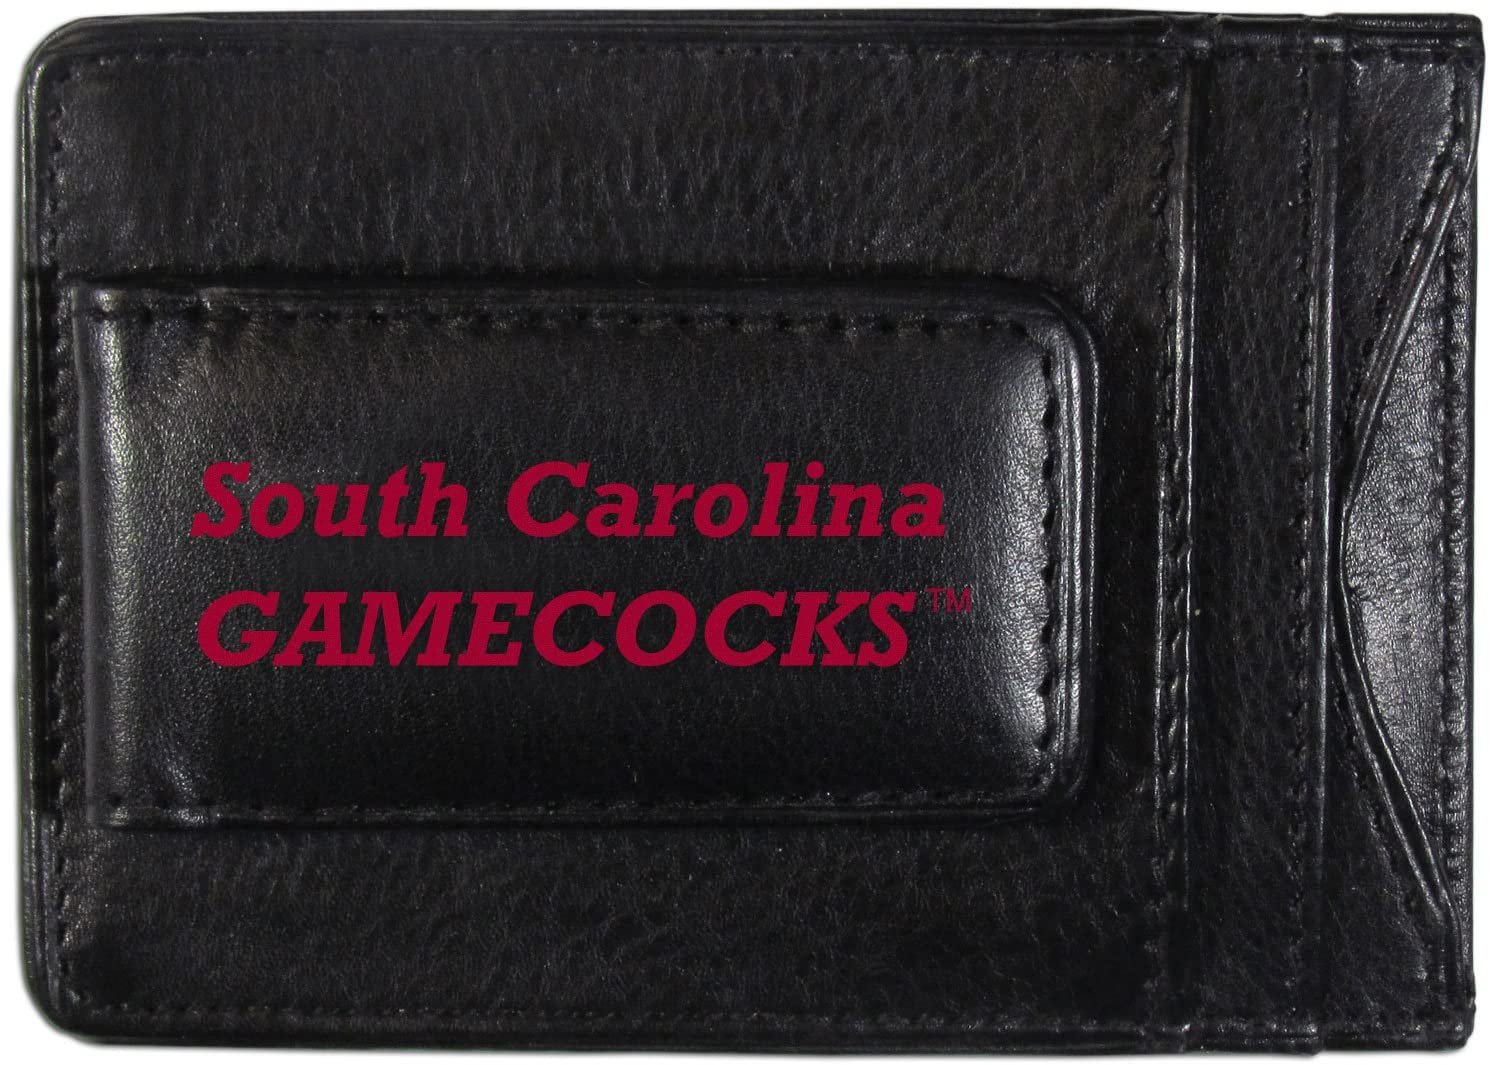 University of South Carolina Gamecocks Black Leather Wallet, Front Pocket Magnetic Money Clip, Printed Logo